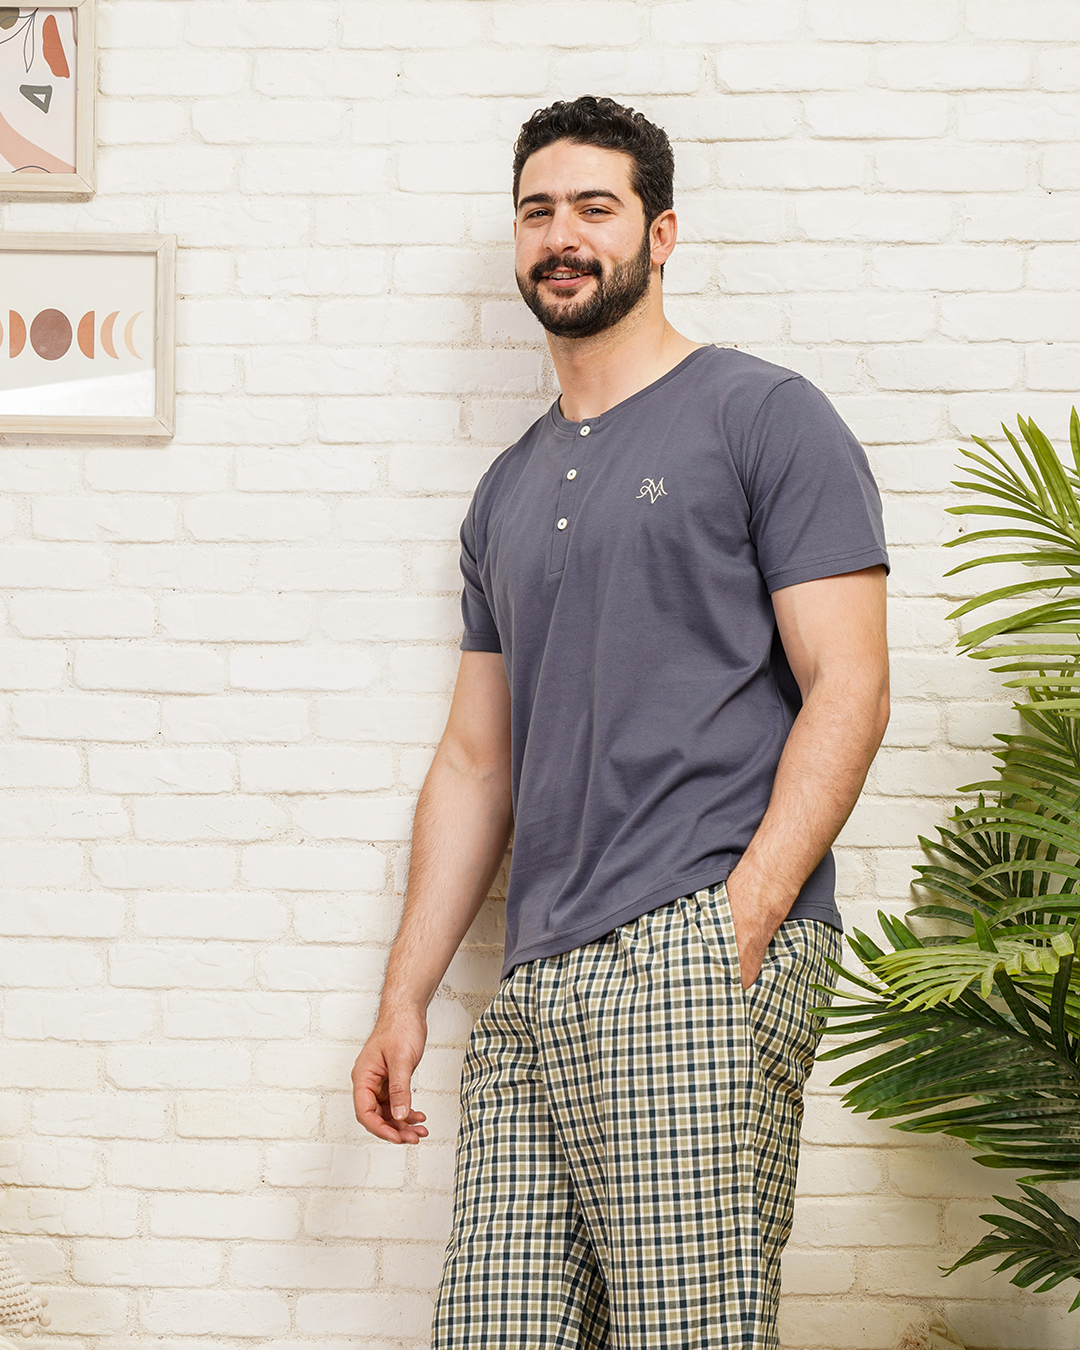 Men's pajamas, half sleeves, button-down bands and checkered shorts